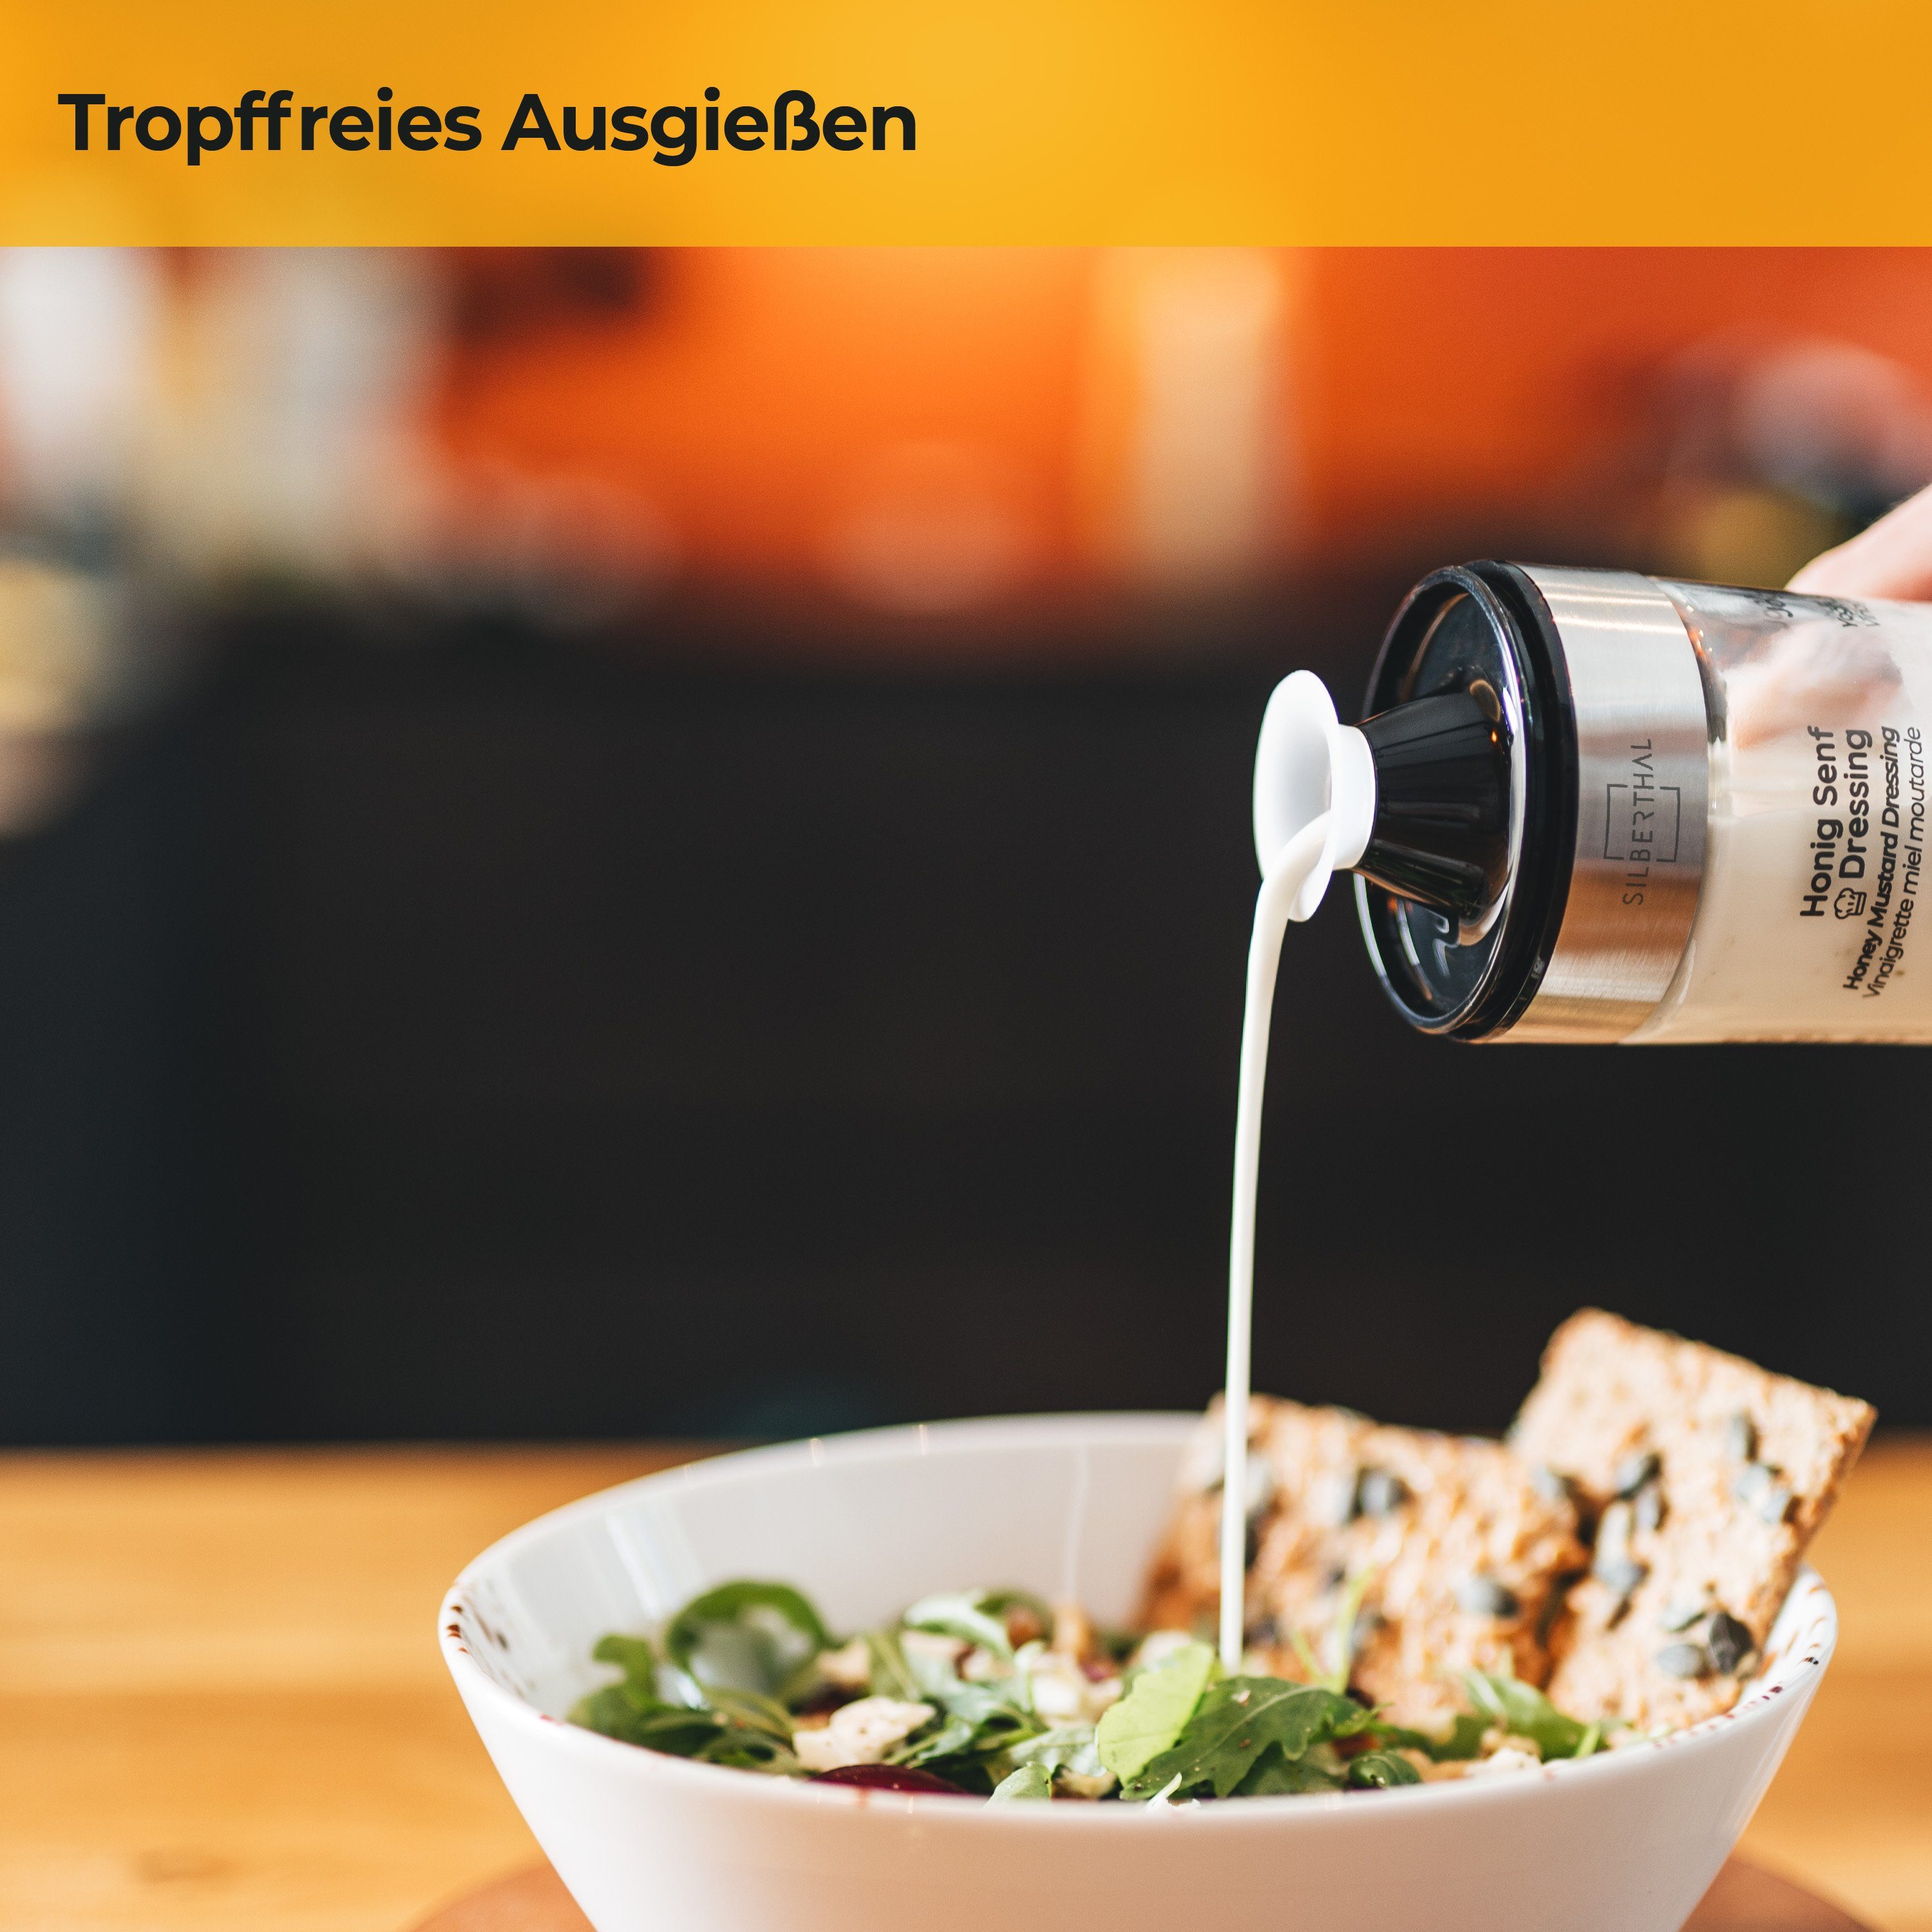 mit Glas, SILBERTHAL Salatdressing integrierter zum Dressing Shaker Behälter 500ml perfekt Salatsaucen Mitnehmen Rezepten, mit Skala, Shaker